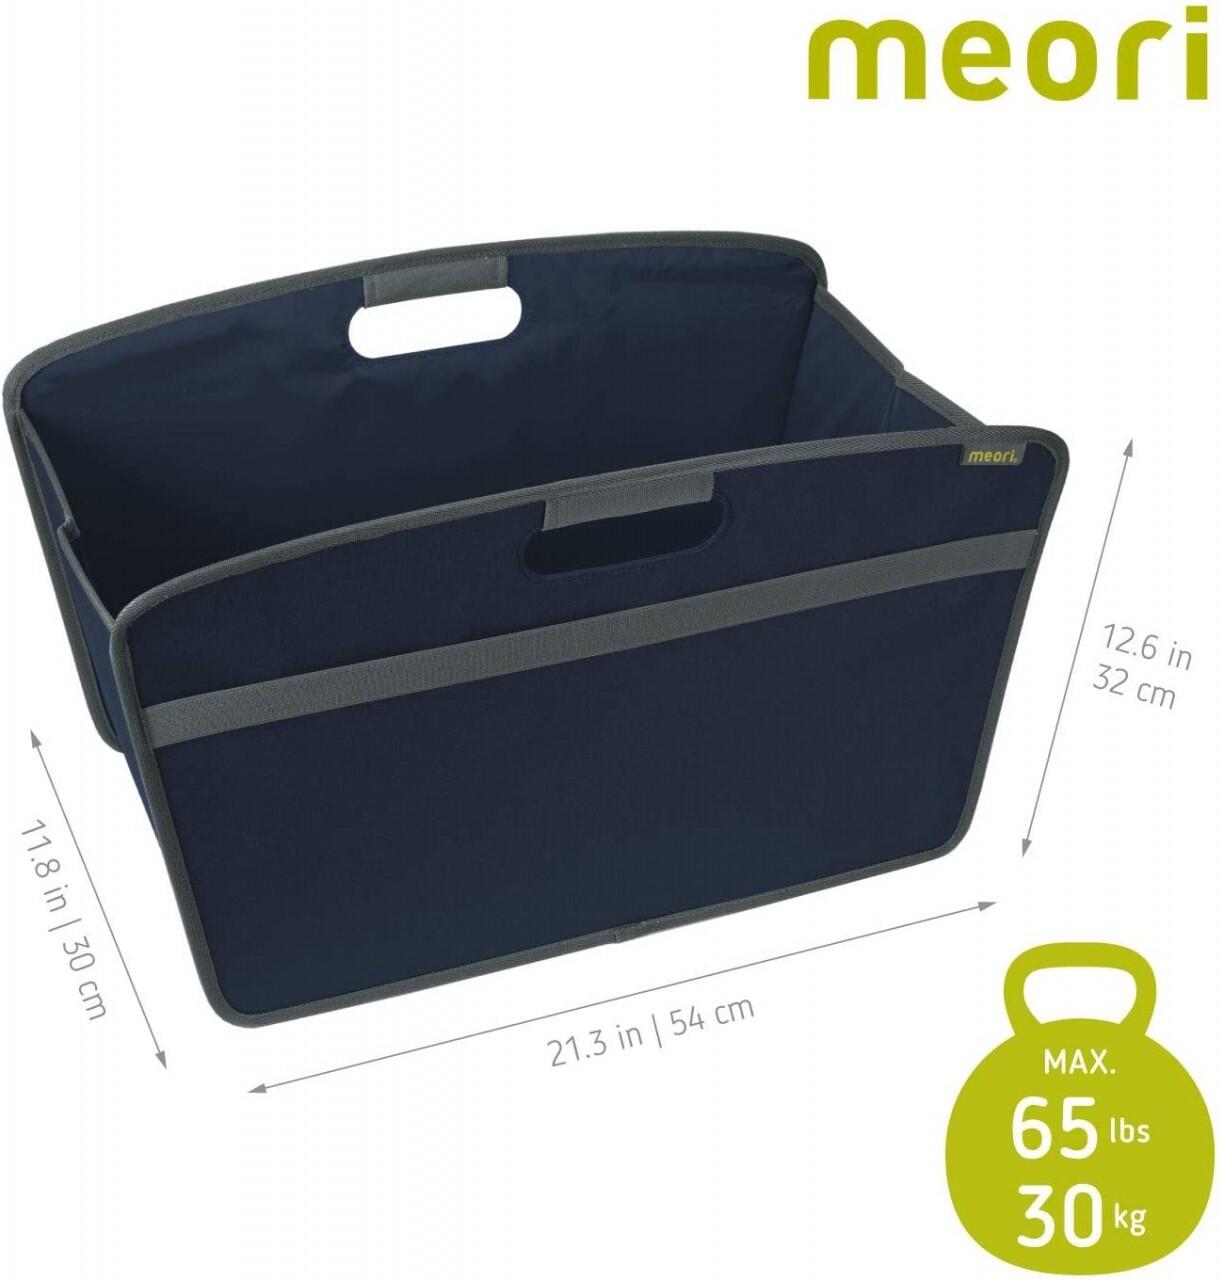 Meori Homebox Faltbox Aufbewahrungsbox Klappbox Korb faltbar meori Marine  Blue A100343